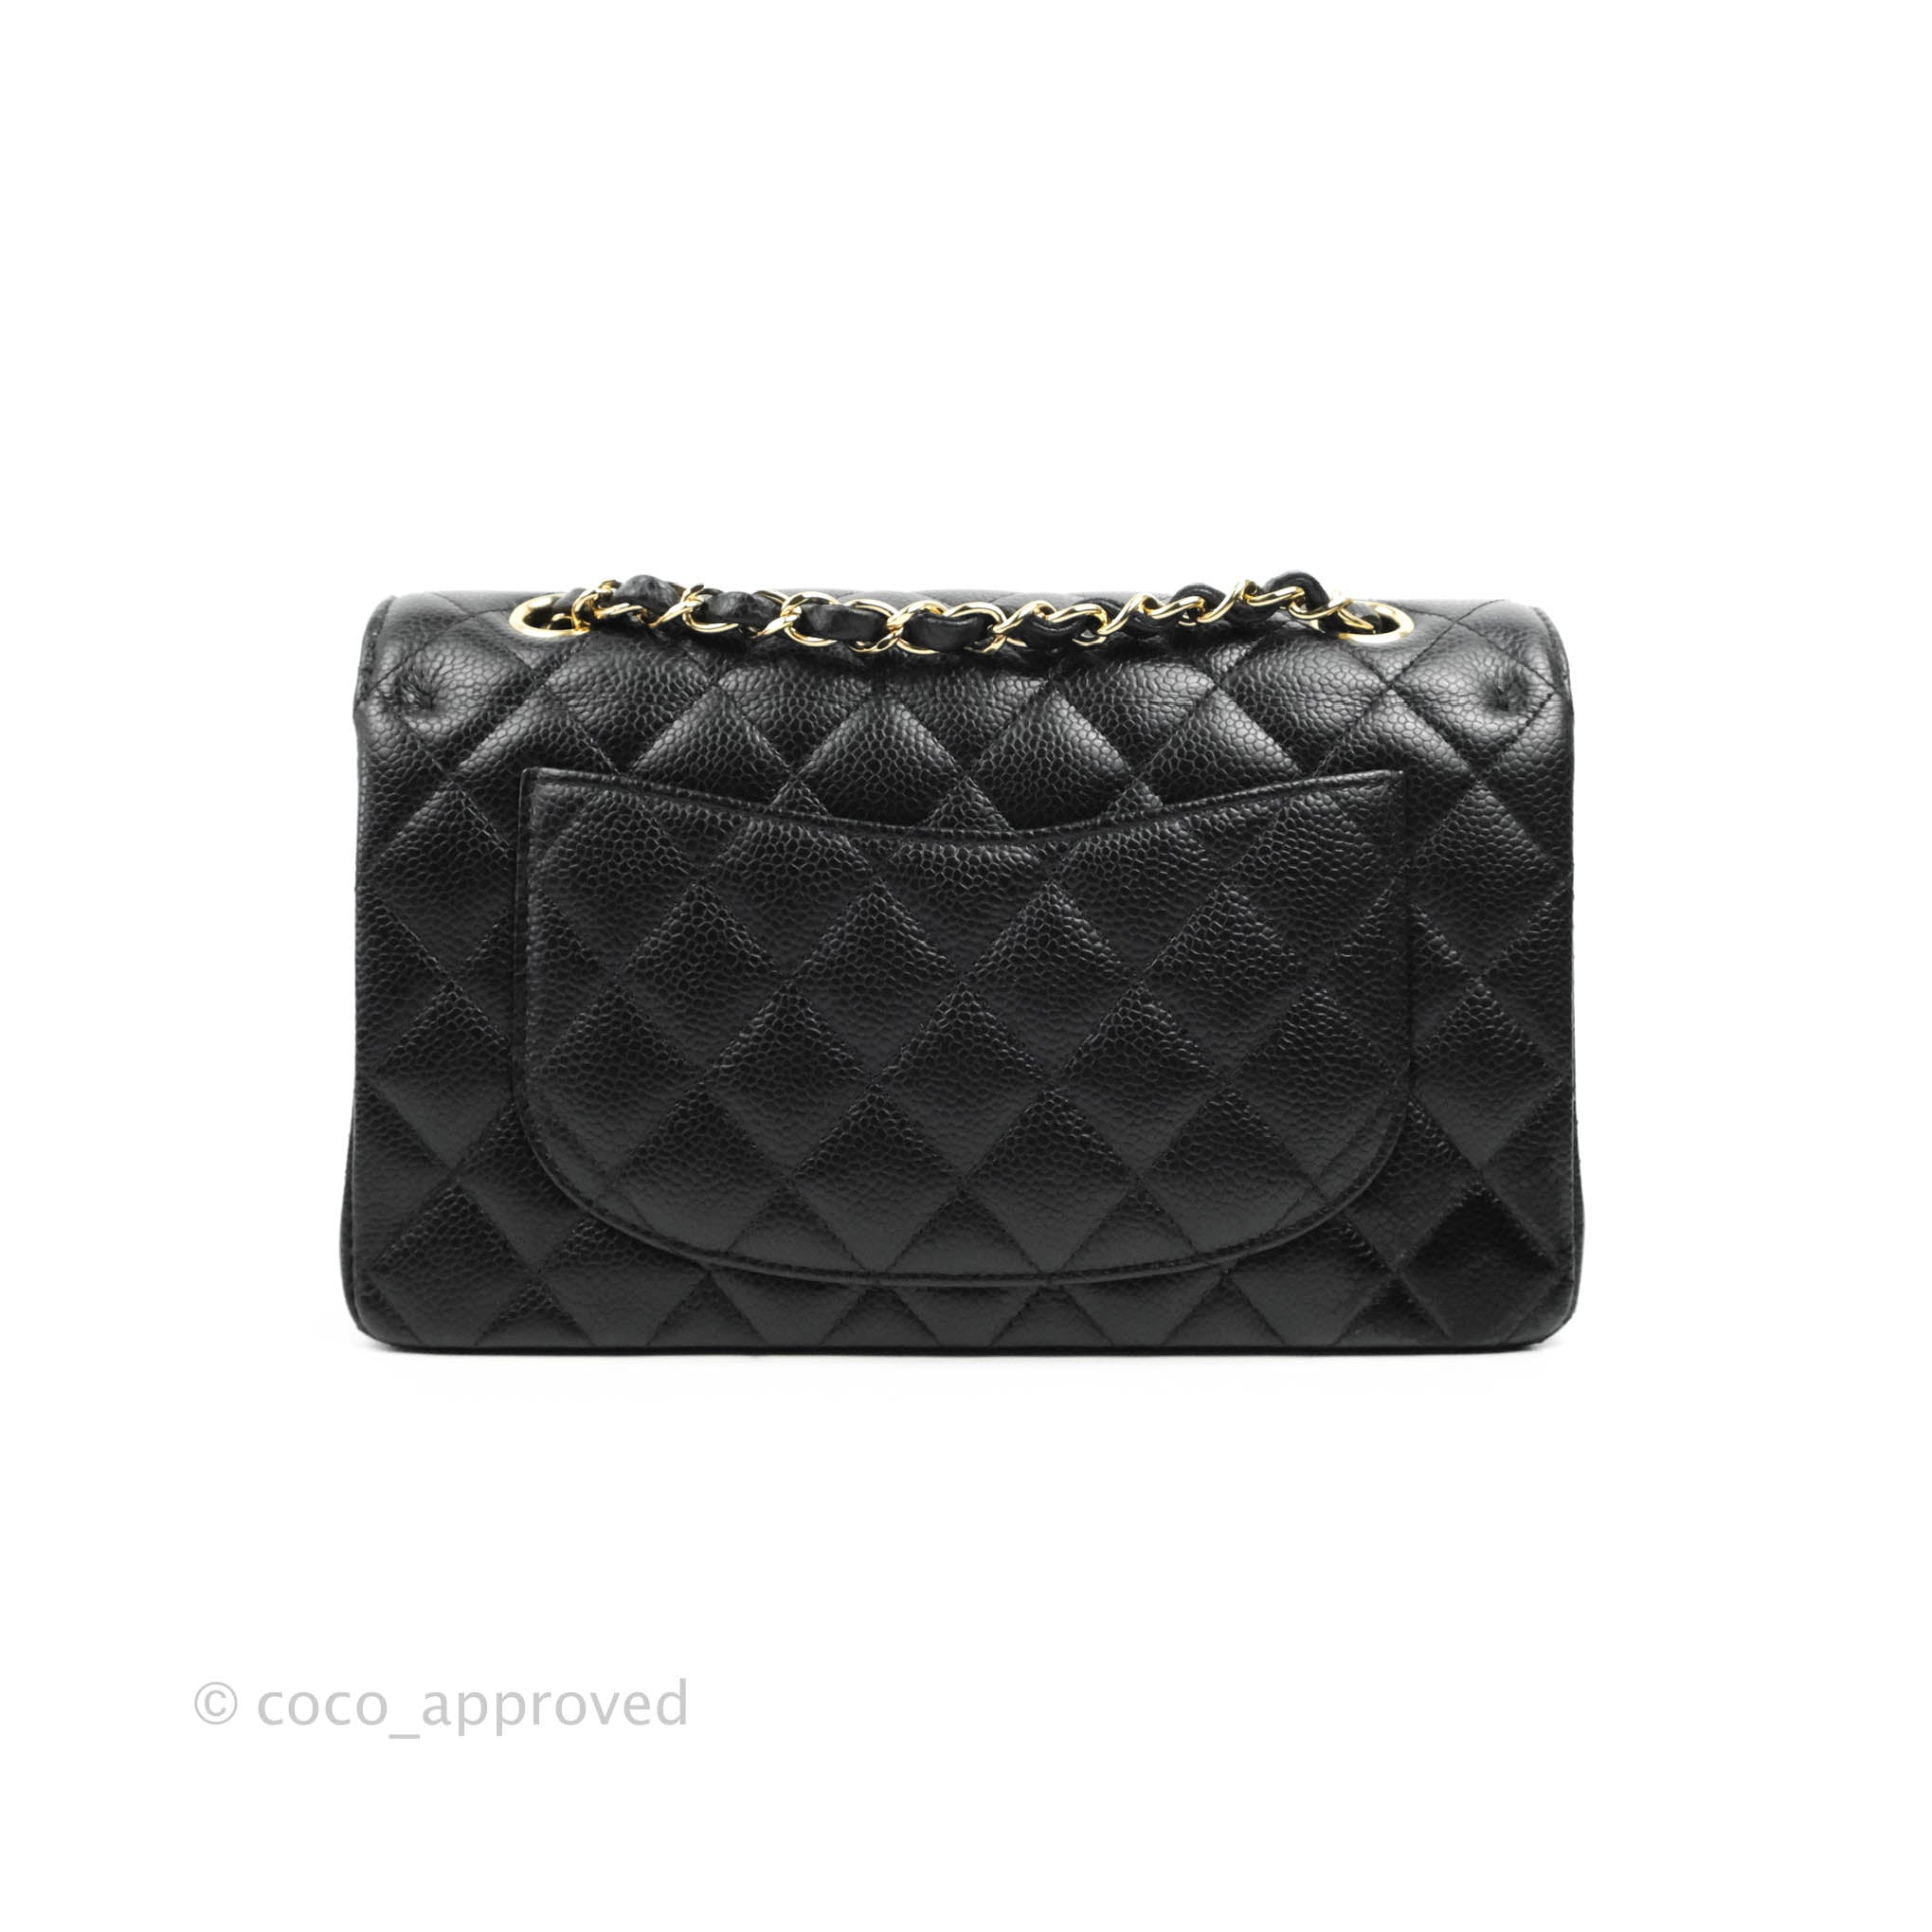 Chanel Seasonal Flap Bag, My Perfect Mini, White Lambskin Leather, Gold  Hardware, Pearl and Leather Strap, New in Box WA001